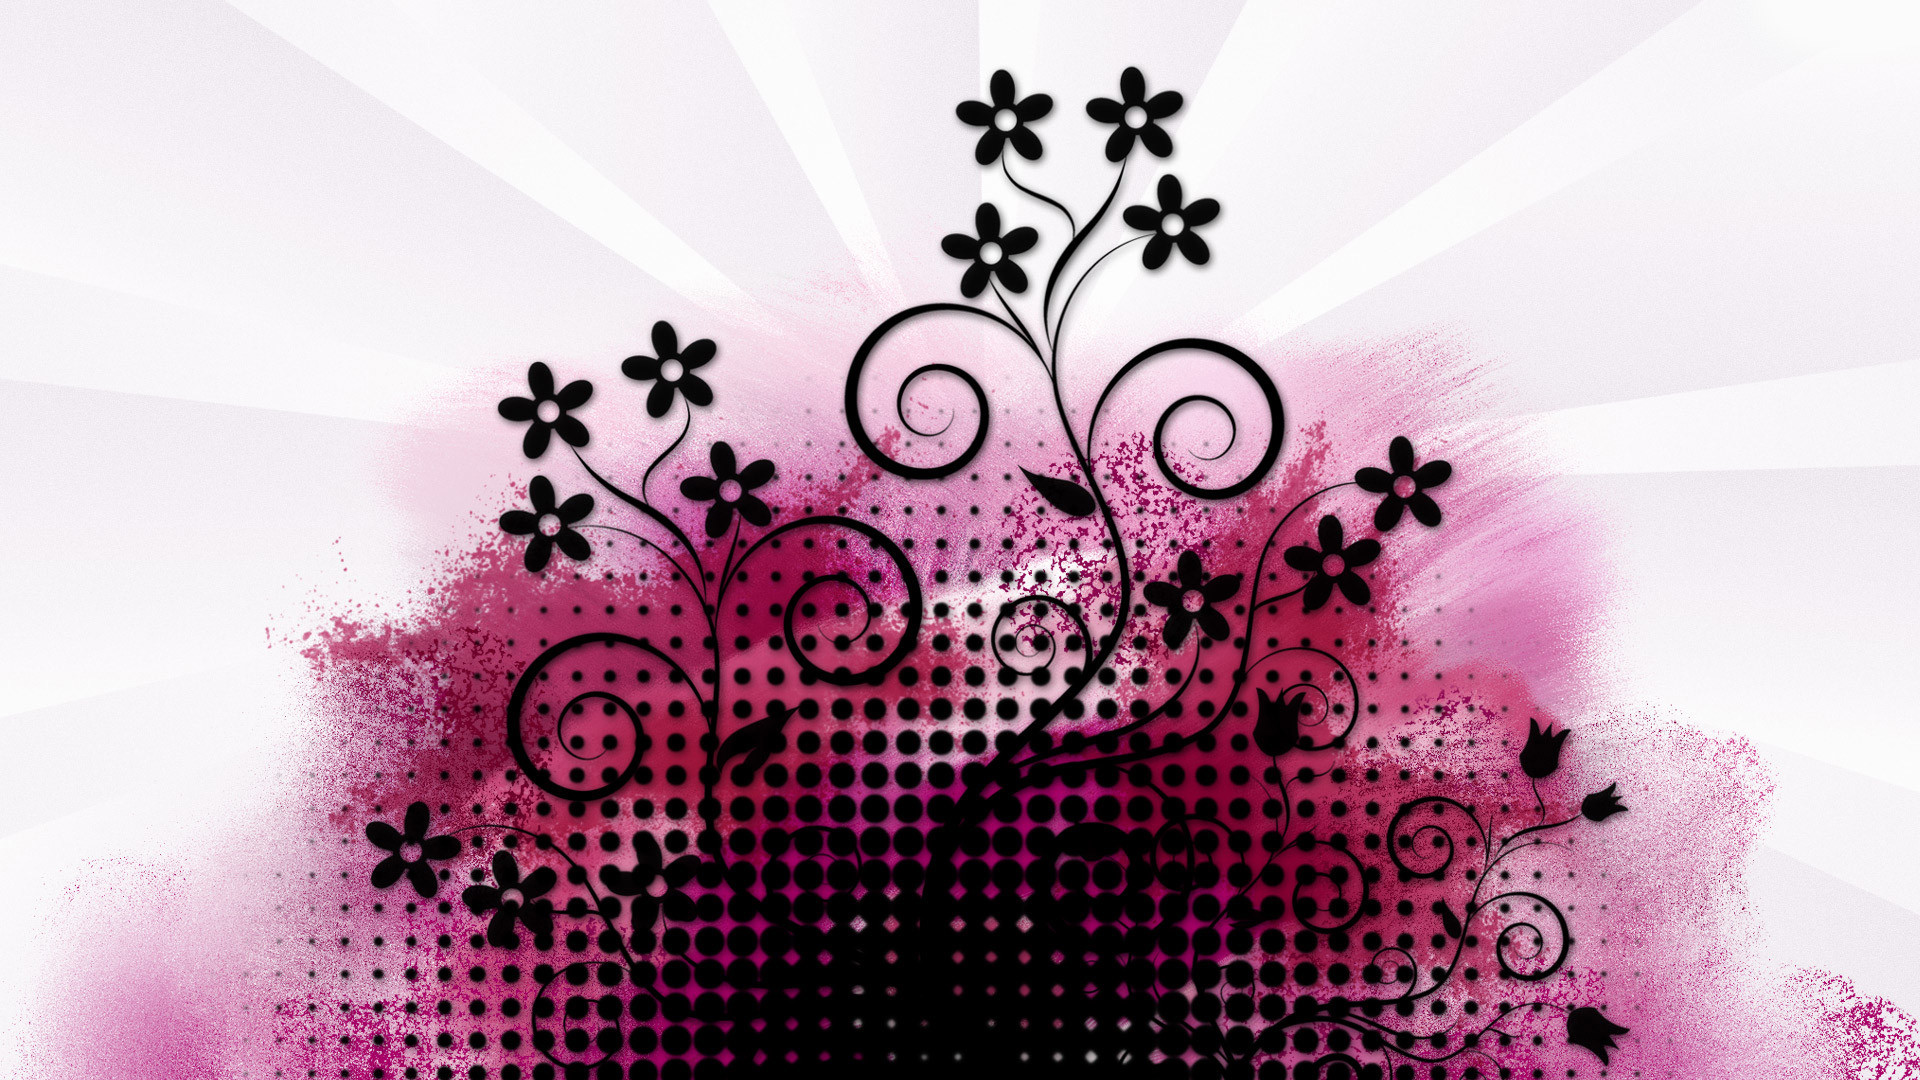 1920x1080 Pink And Black Wallpaper Designs 5 Cool Hd Wallpaper